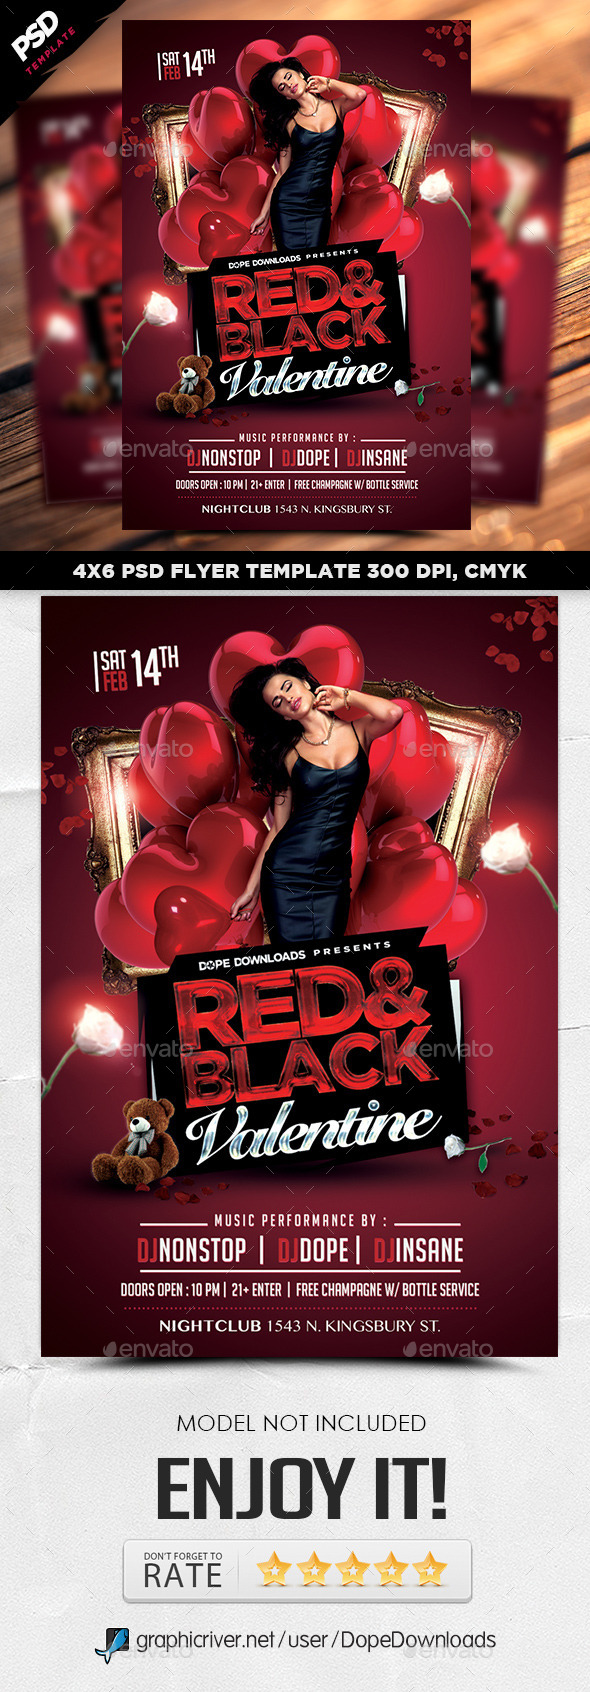 Red & Black Valentine Flyer Template